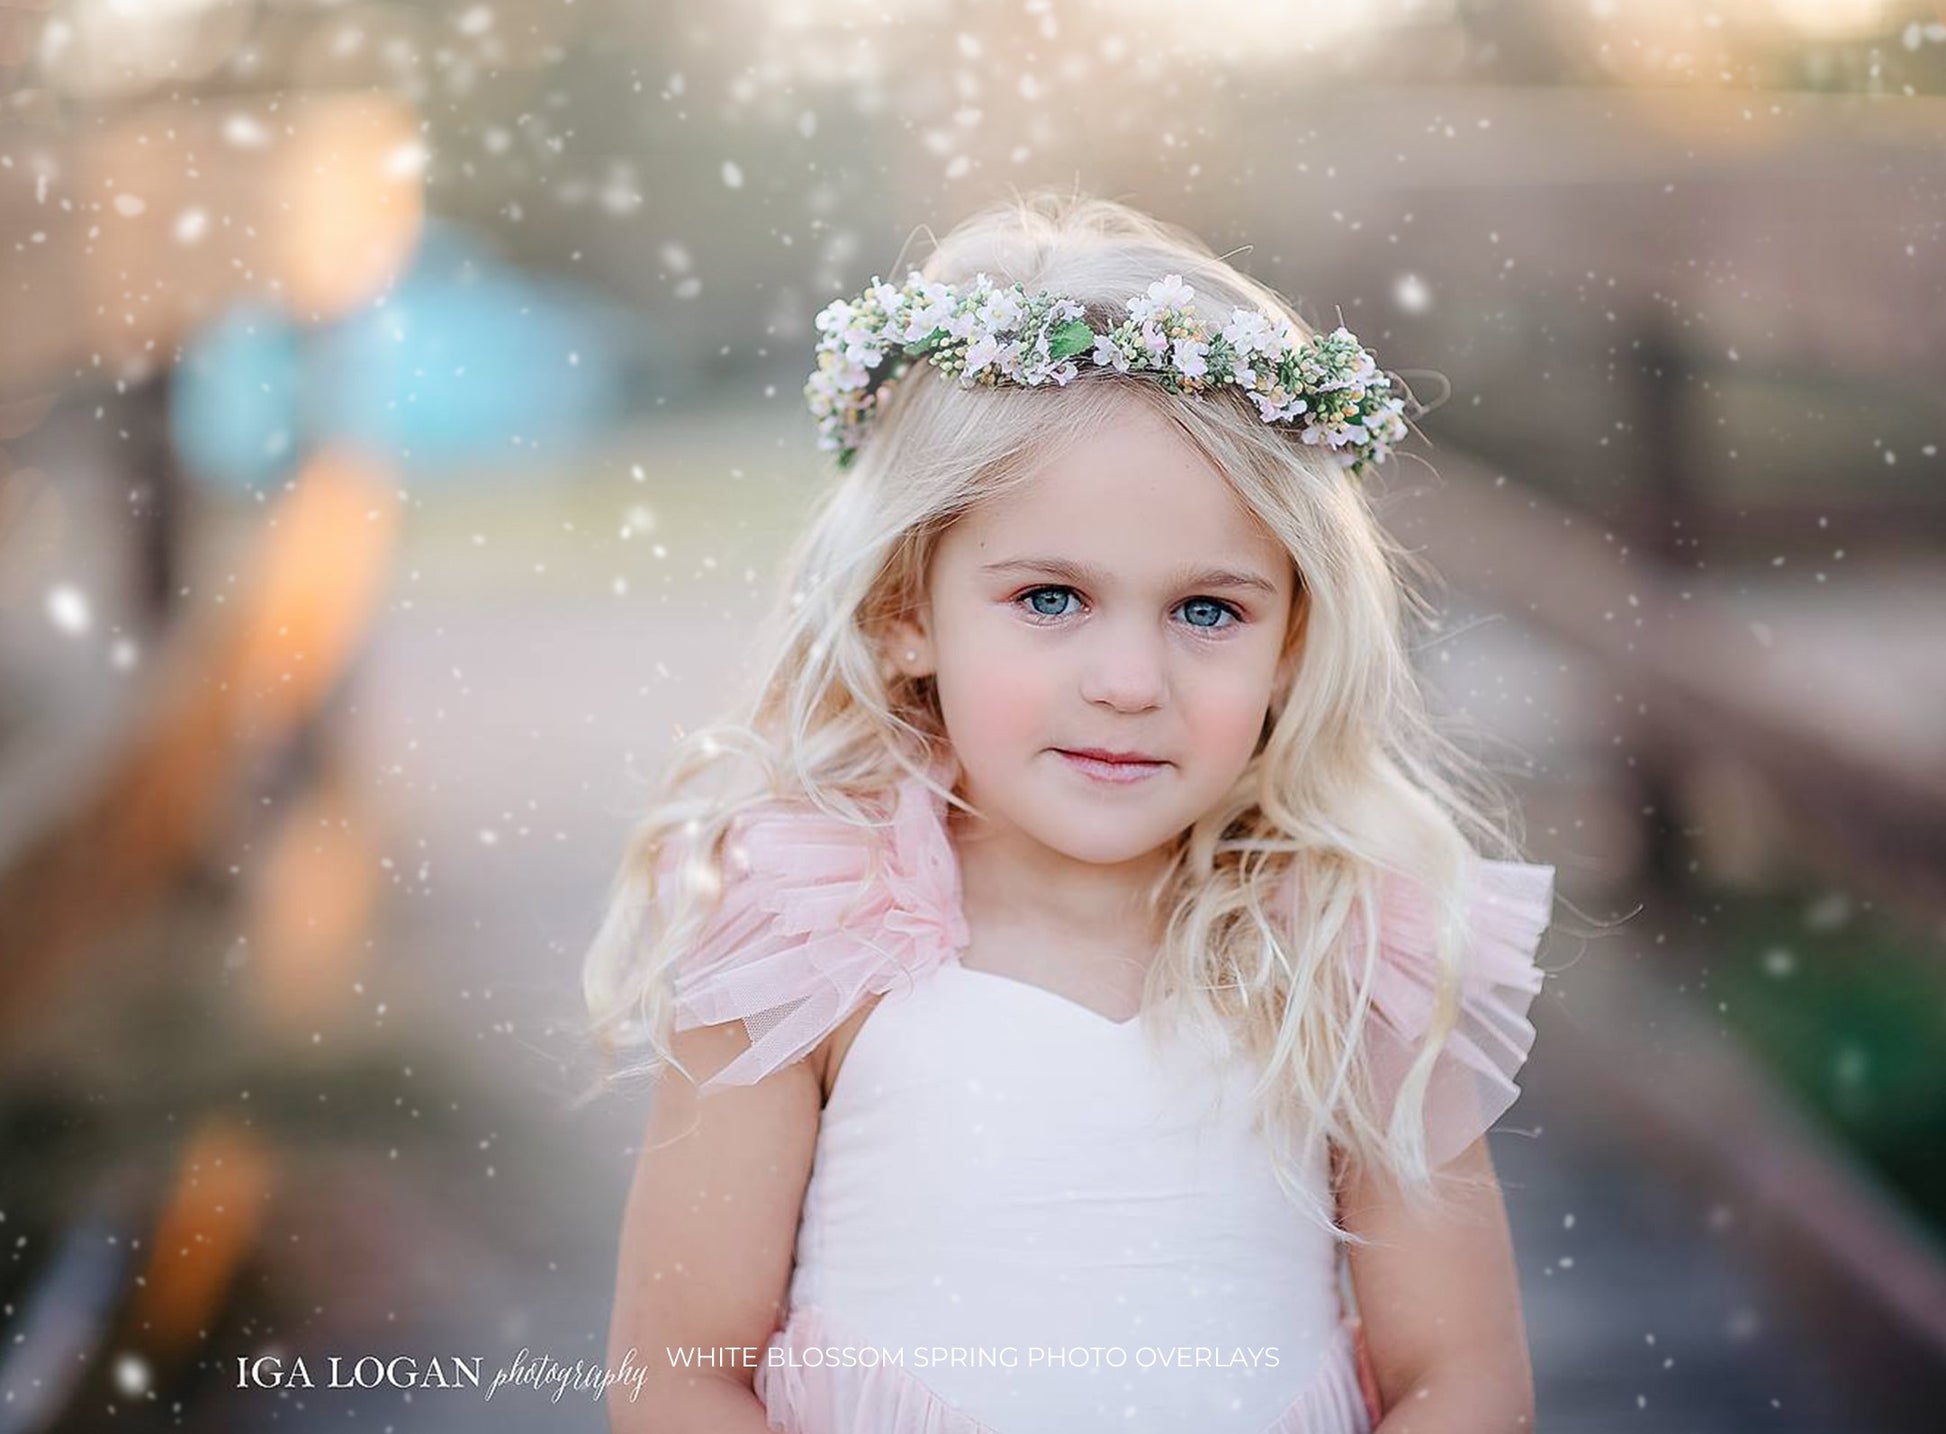 White Blossom Photo Overlays - Photoshop Overlays, Digital Backgrounds and Lightroom Presets